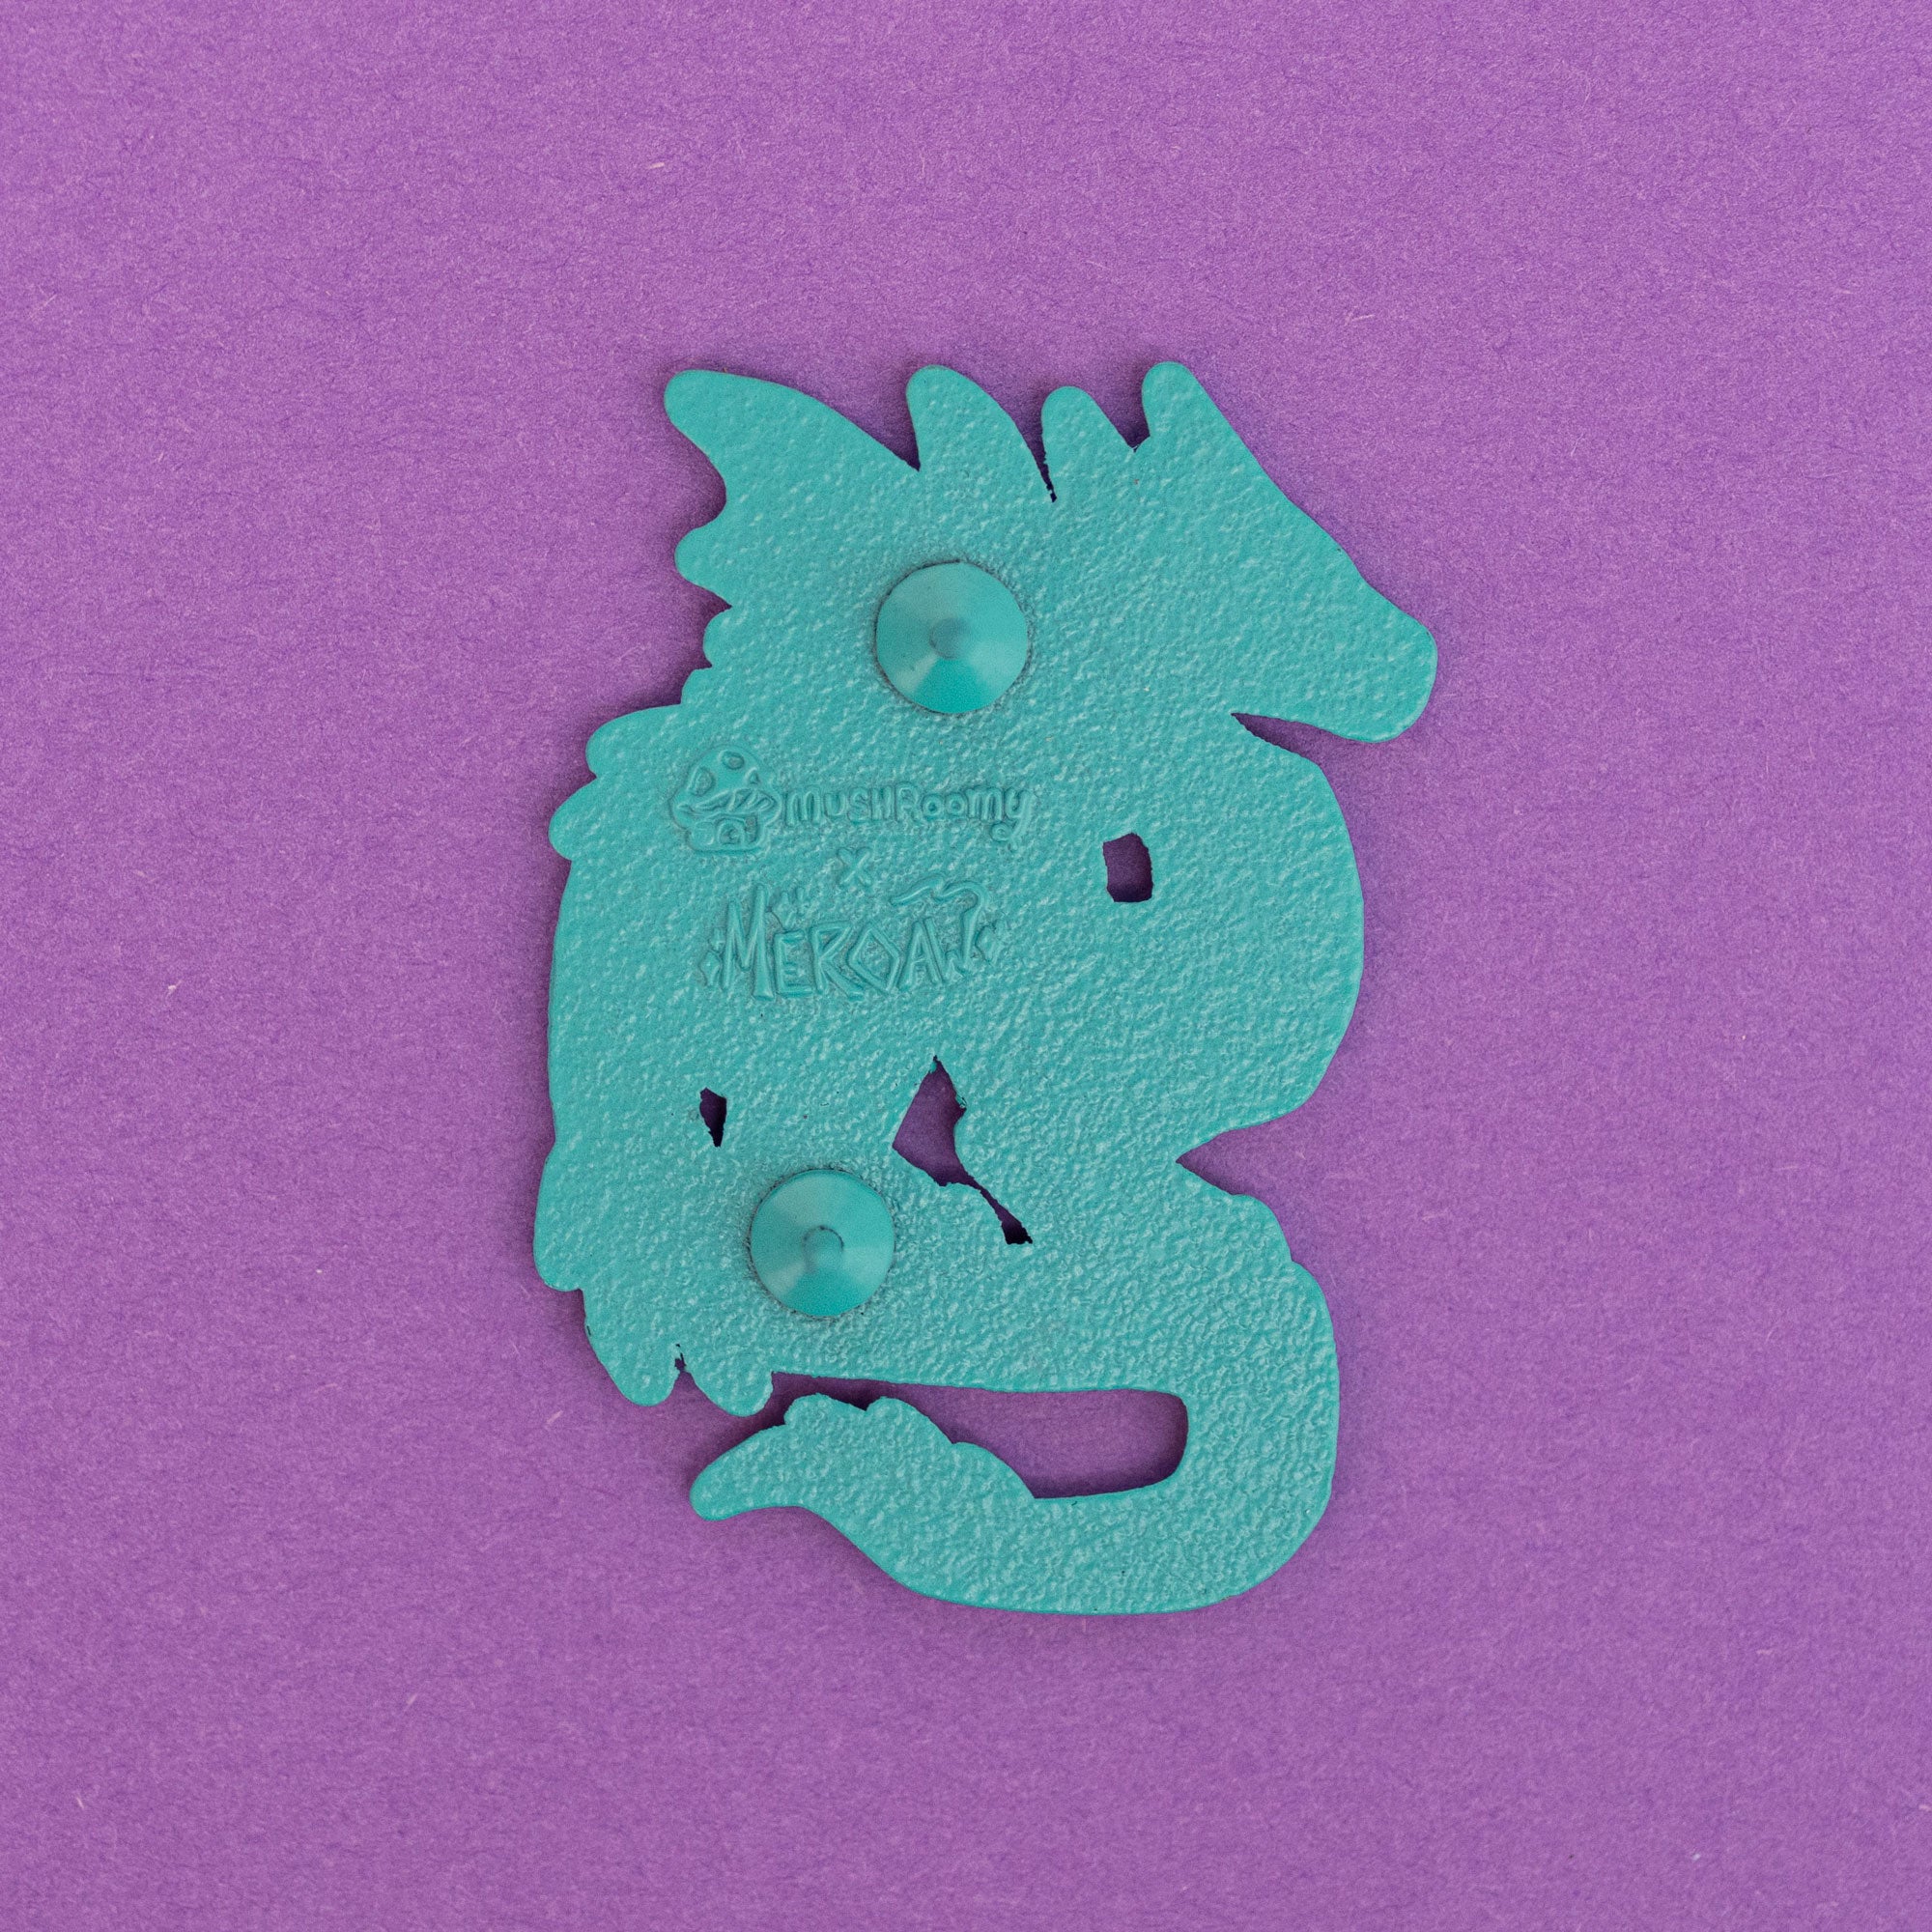 Teal Dragon Soft Enamel Pin